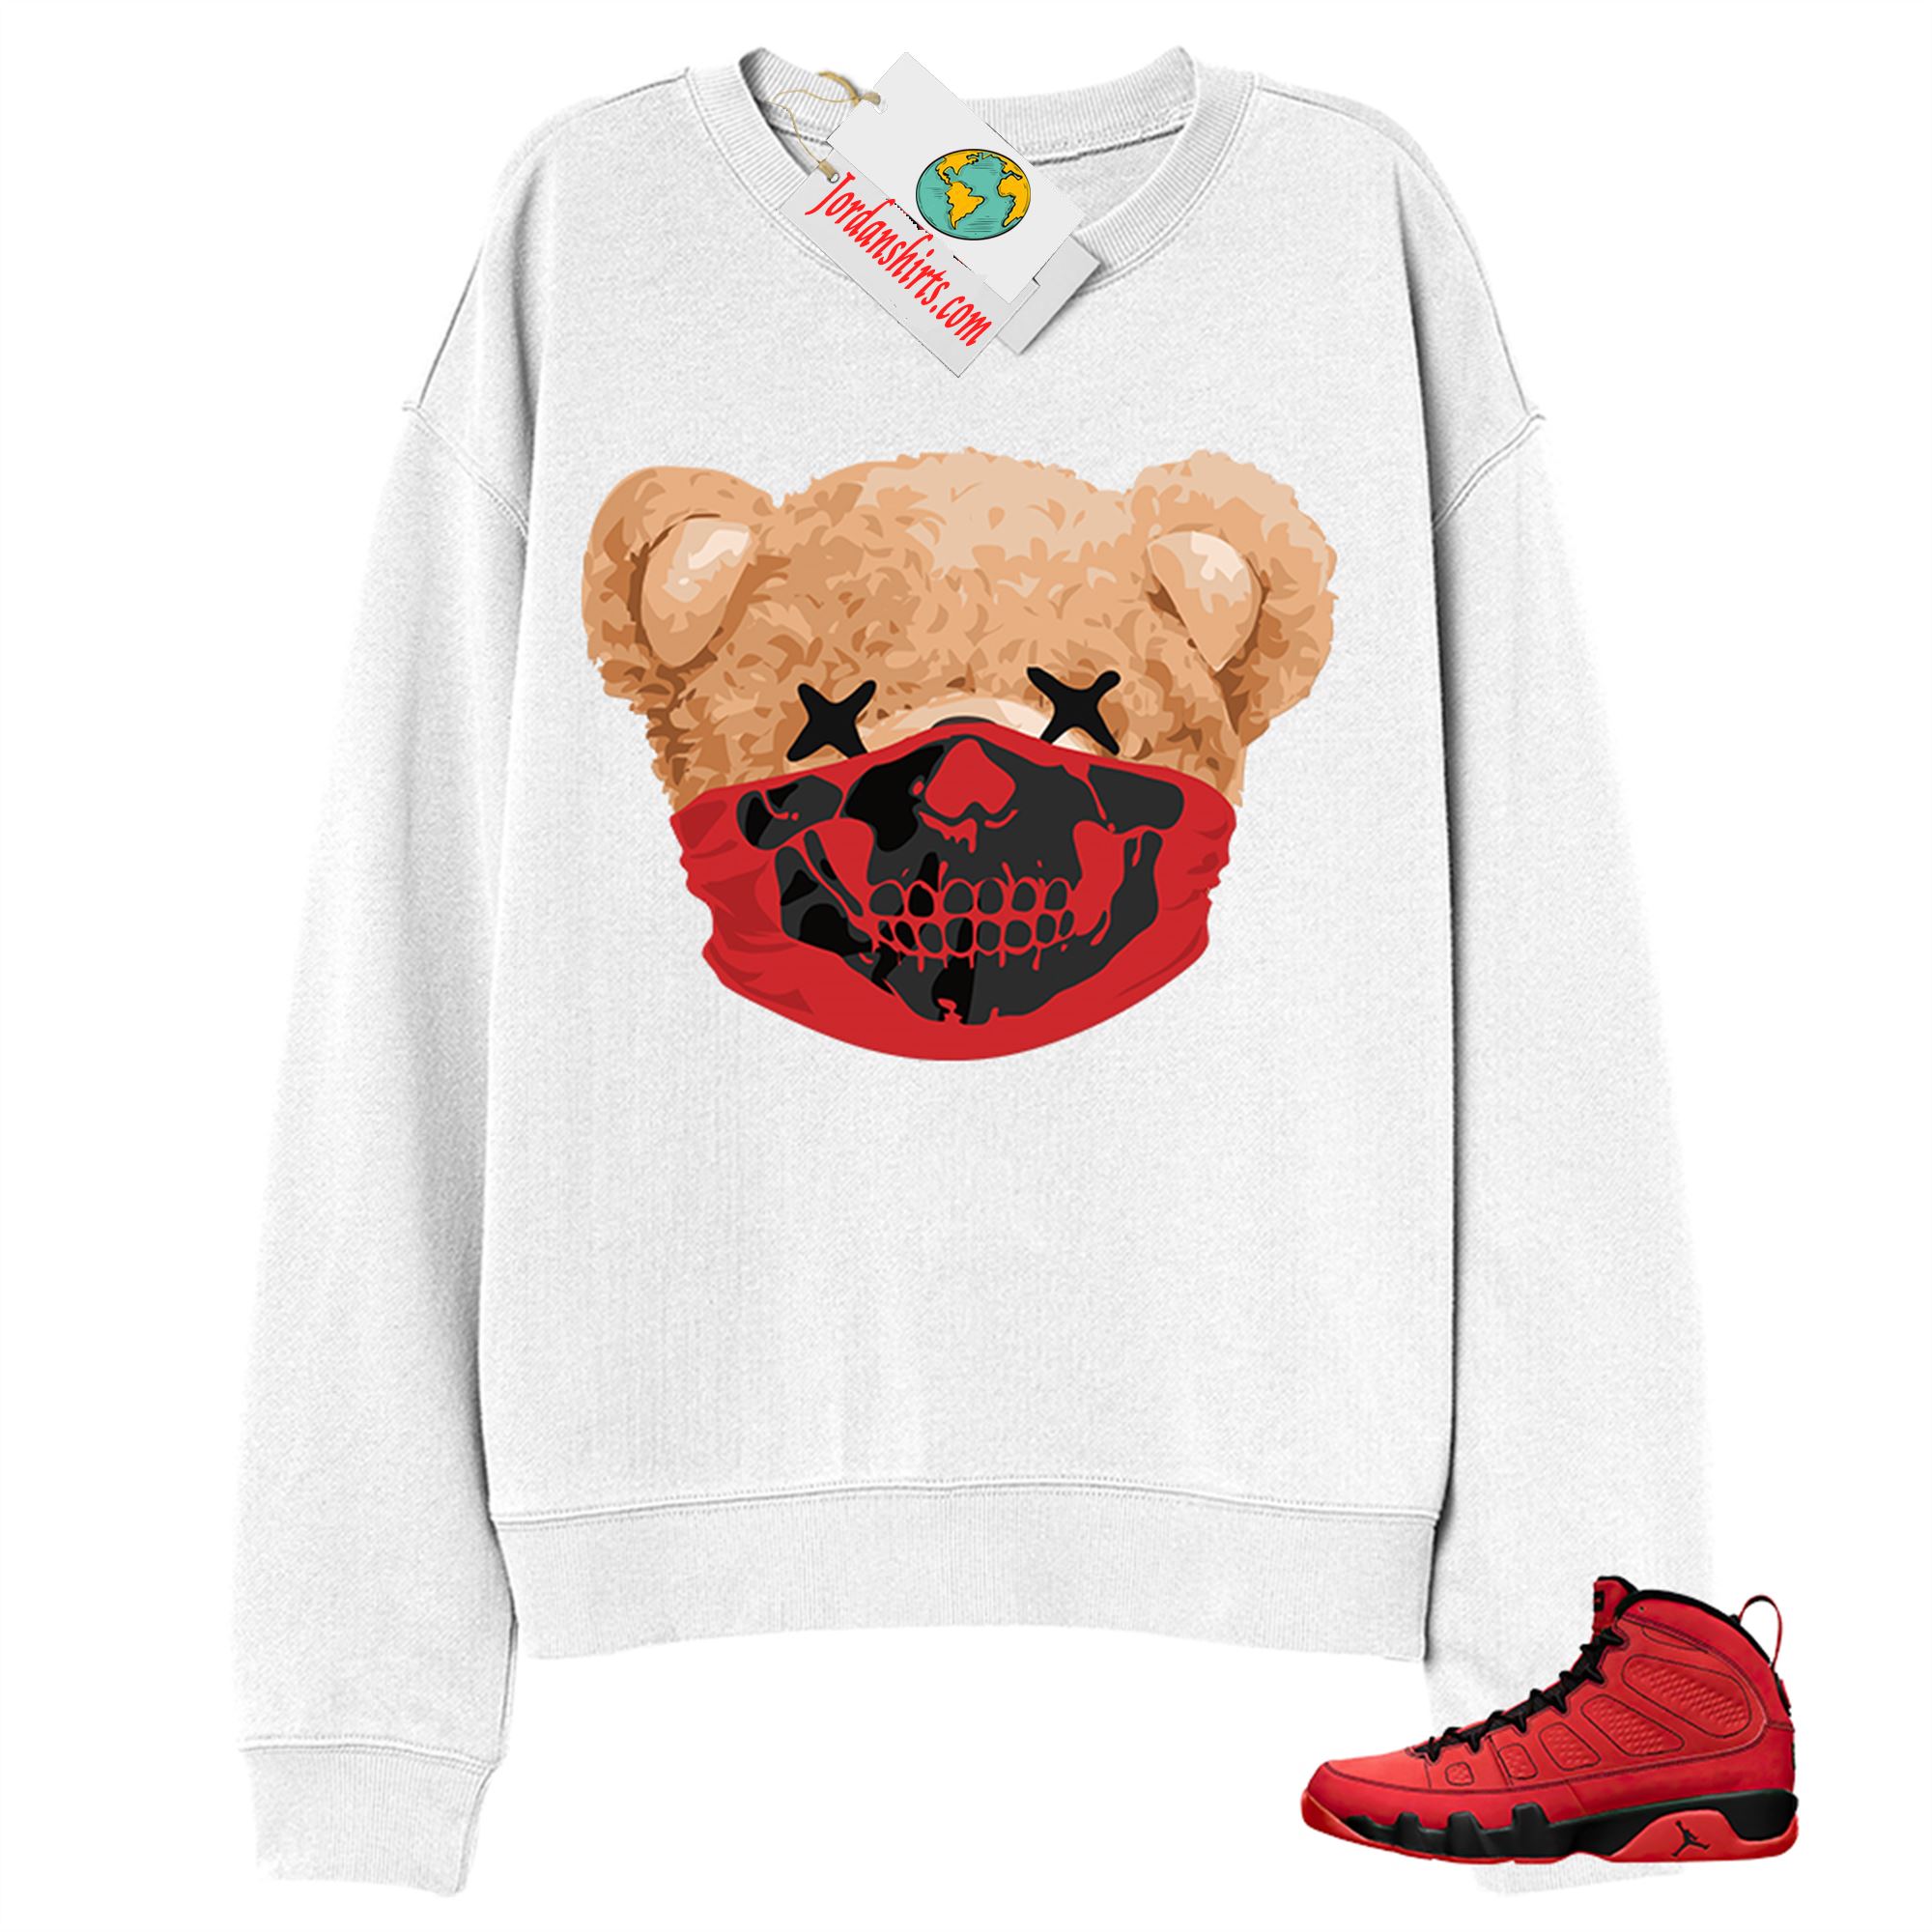 Jordan 9 Sweatshirt, Teddy Bear Skull Bandana White Sweatshirt Air Jordan 9 Chile Red 9s Size Up To 5xl